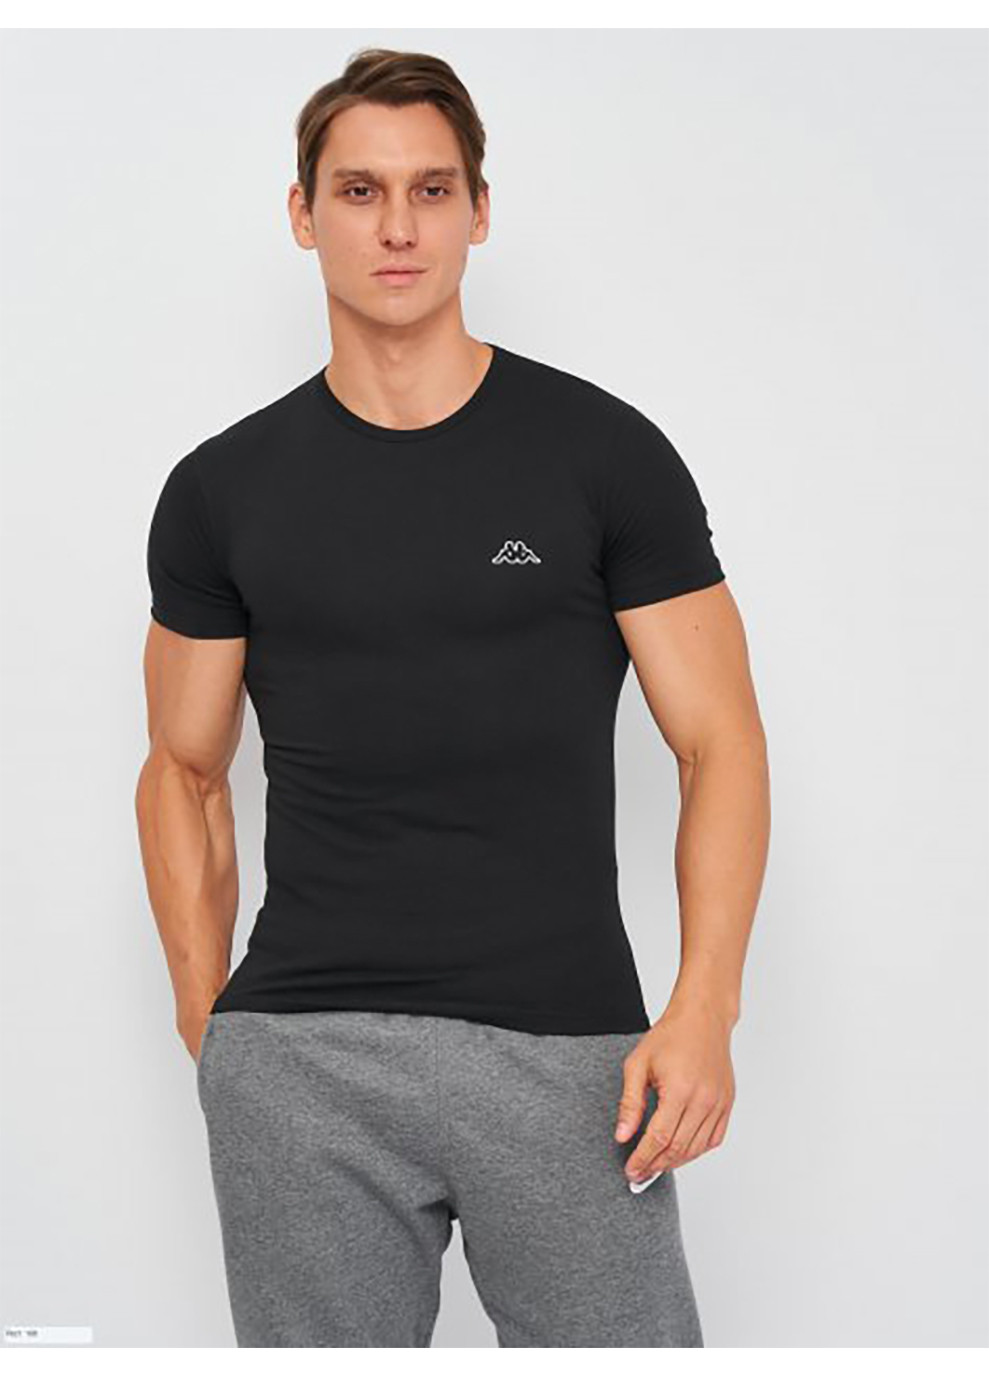 Черная футболка t-shirt mezza manica girocollo черный муж l k1306 nero l Kappa